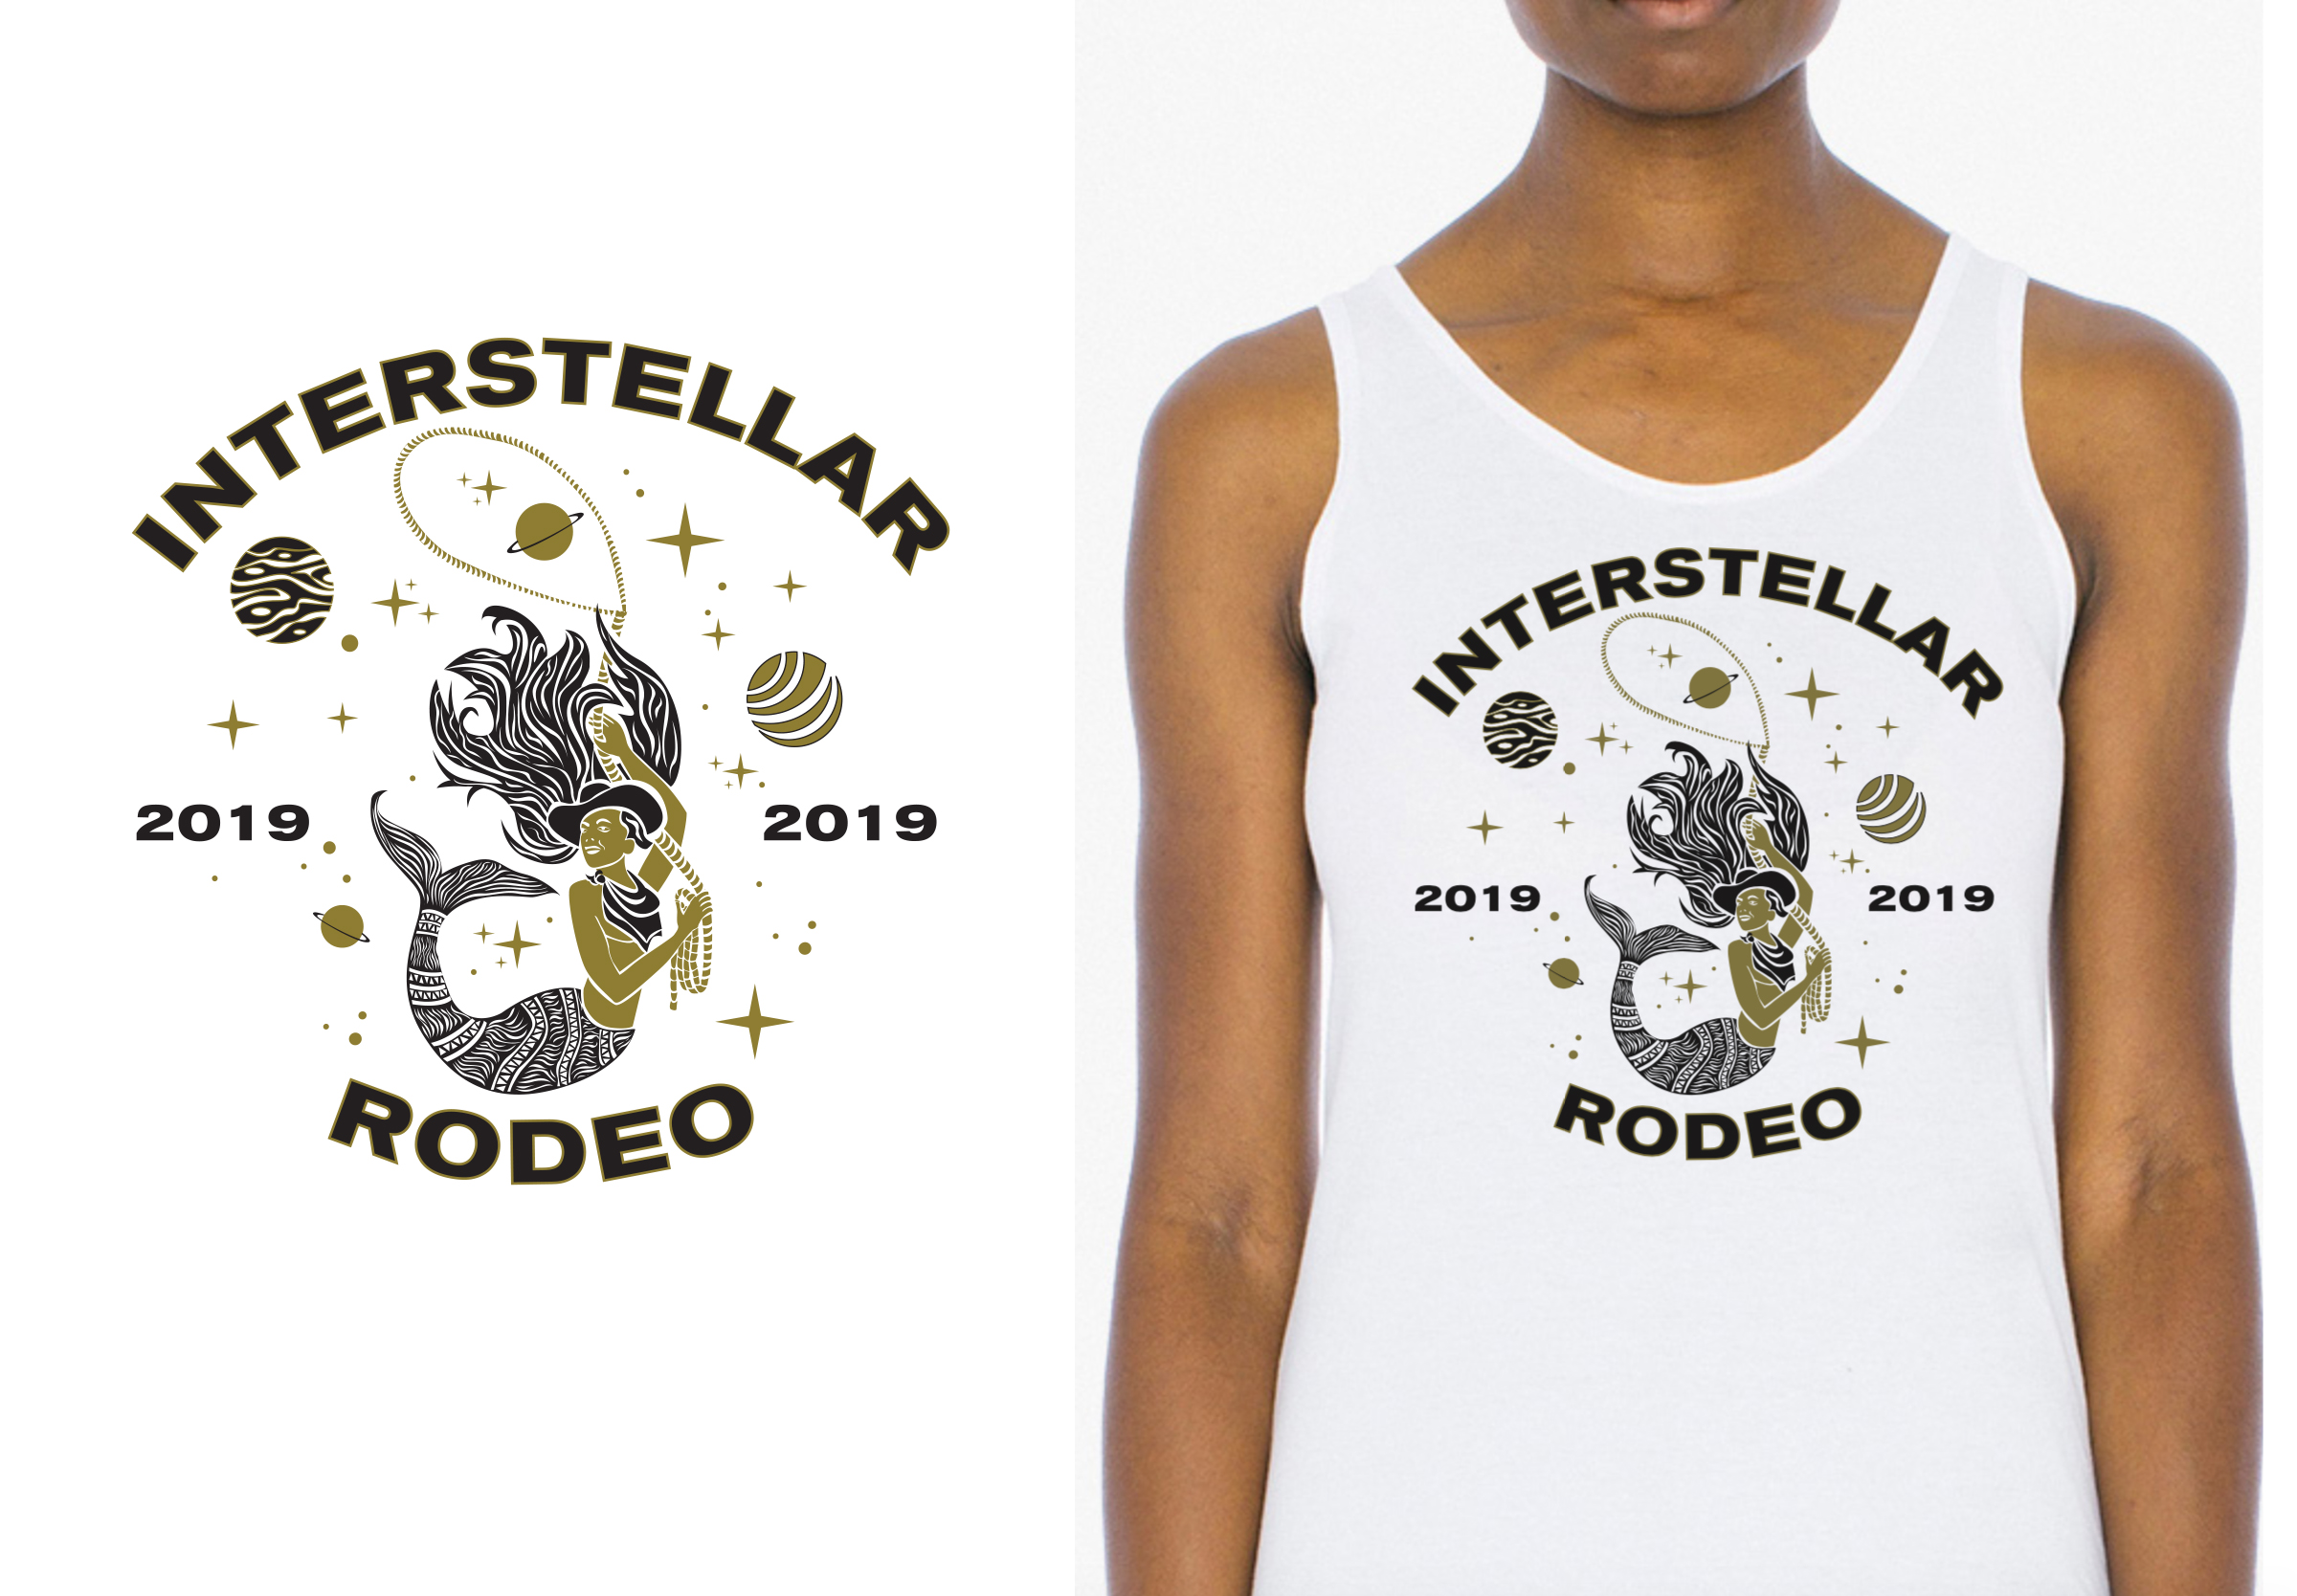 Interstellar Rodeo — Interstellar Mermaid